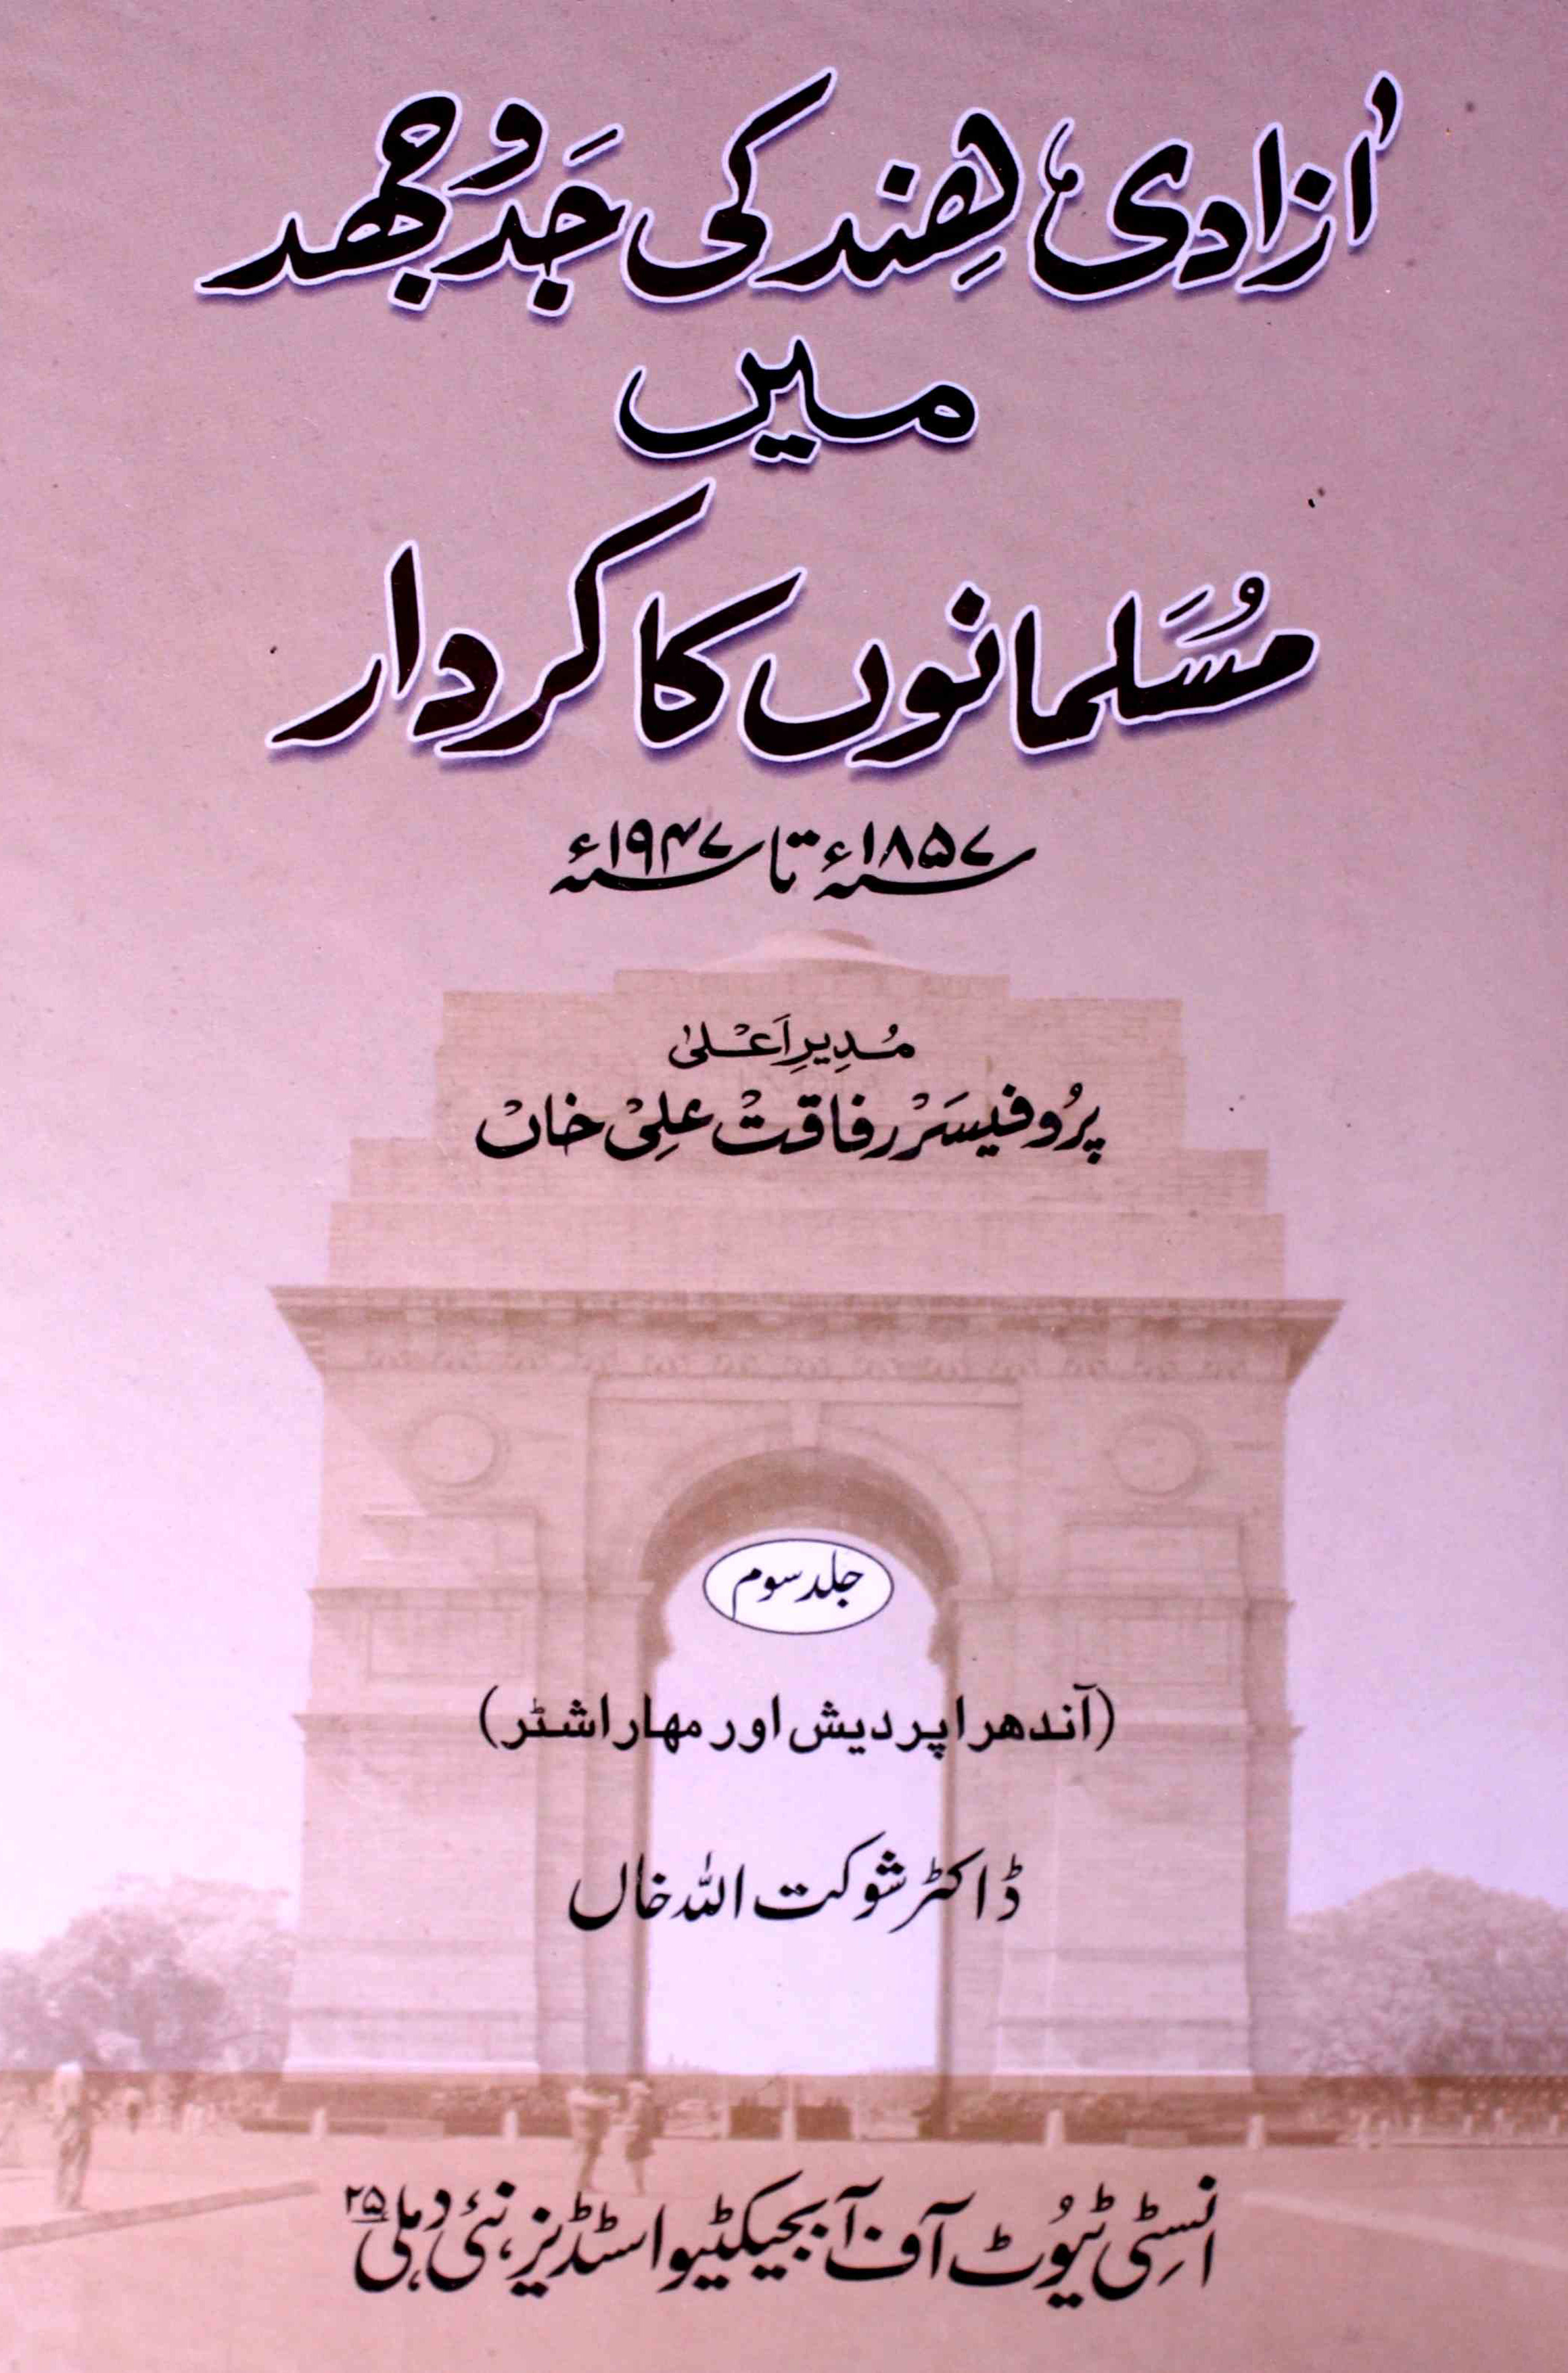 Aazadi-e-Hind Ki Jadd-o-Jehad Mein Musalmanon Ka Kirdar 1857-1947